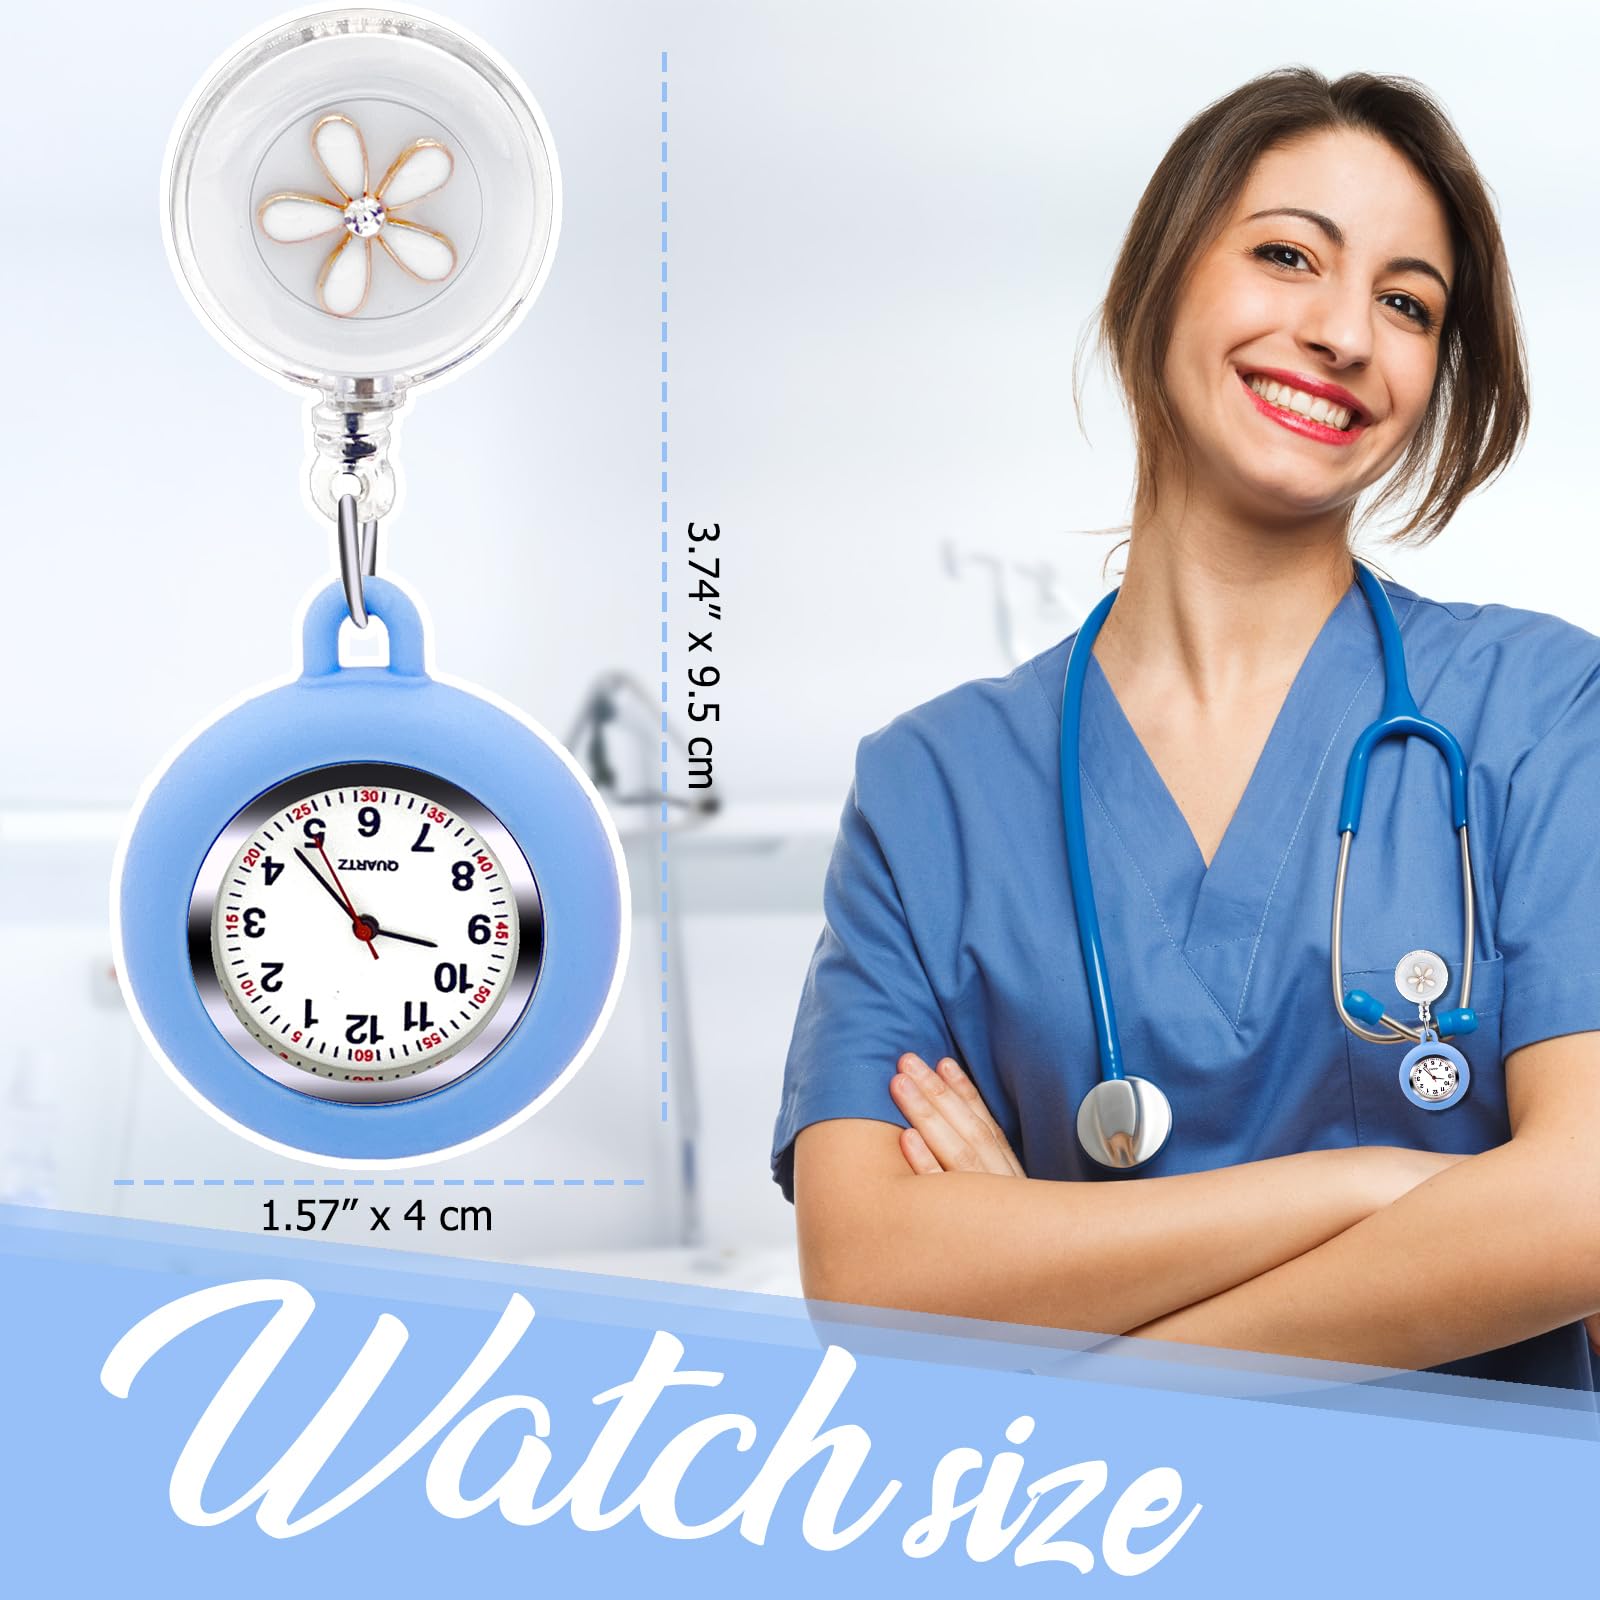 Lragvtbk 2 Pcs Retractable Nurse Watch for Nurses Student Gifts Clip Watch Nurse Badge Accessories